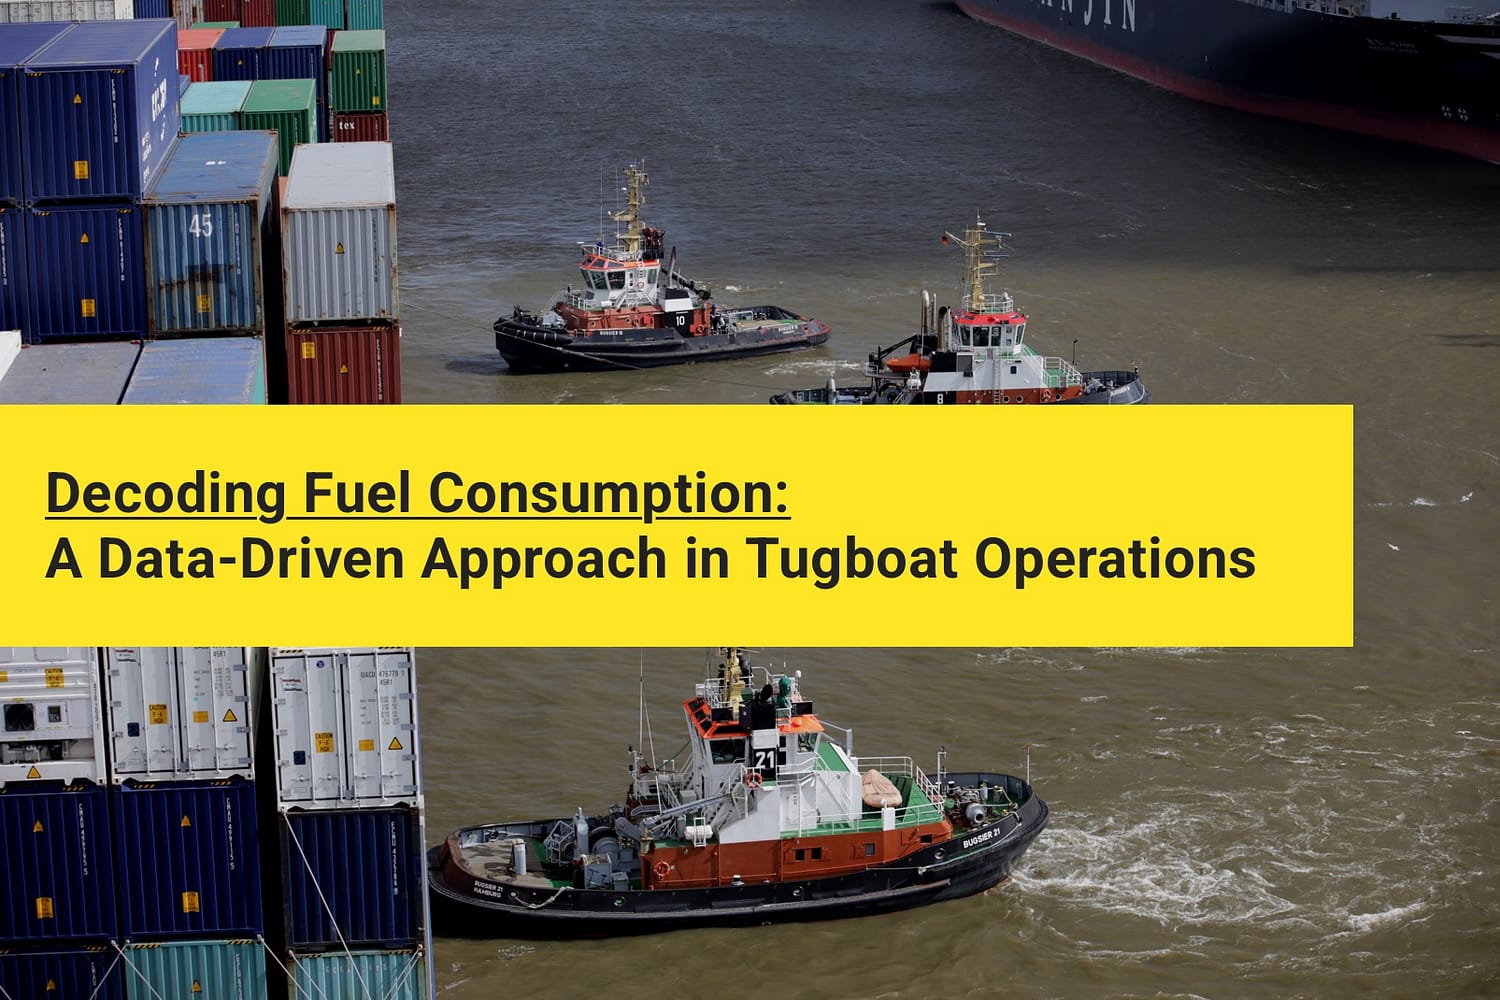 Revolutionizing Tugboat Fuel Consumption with LionRock